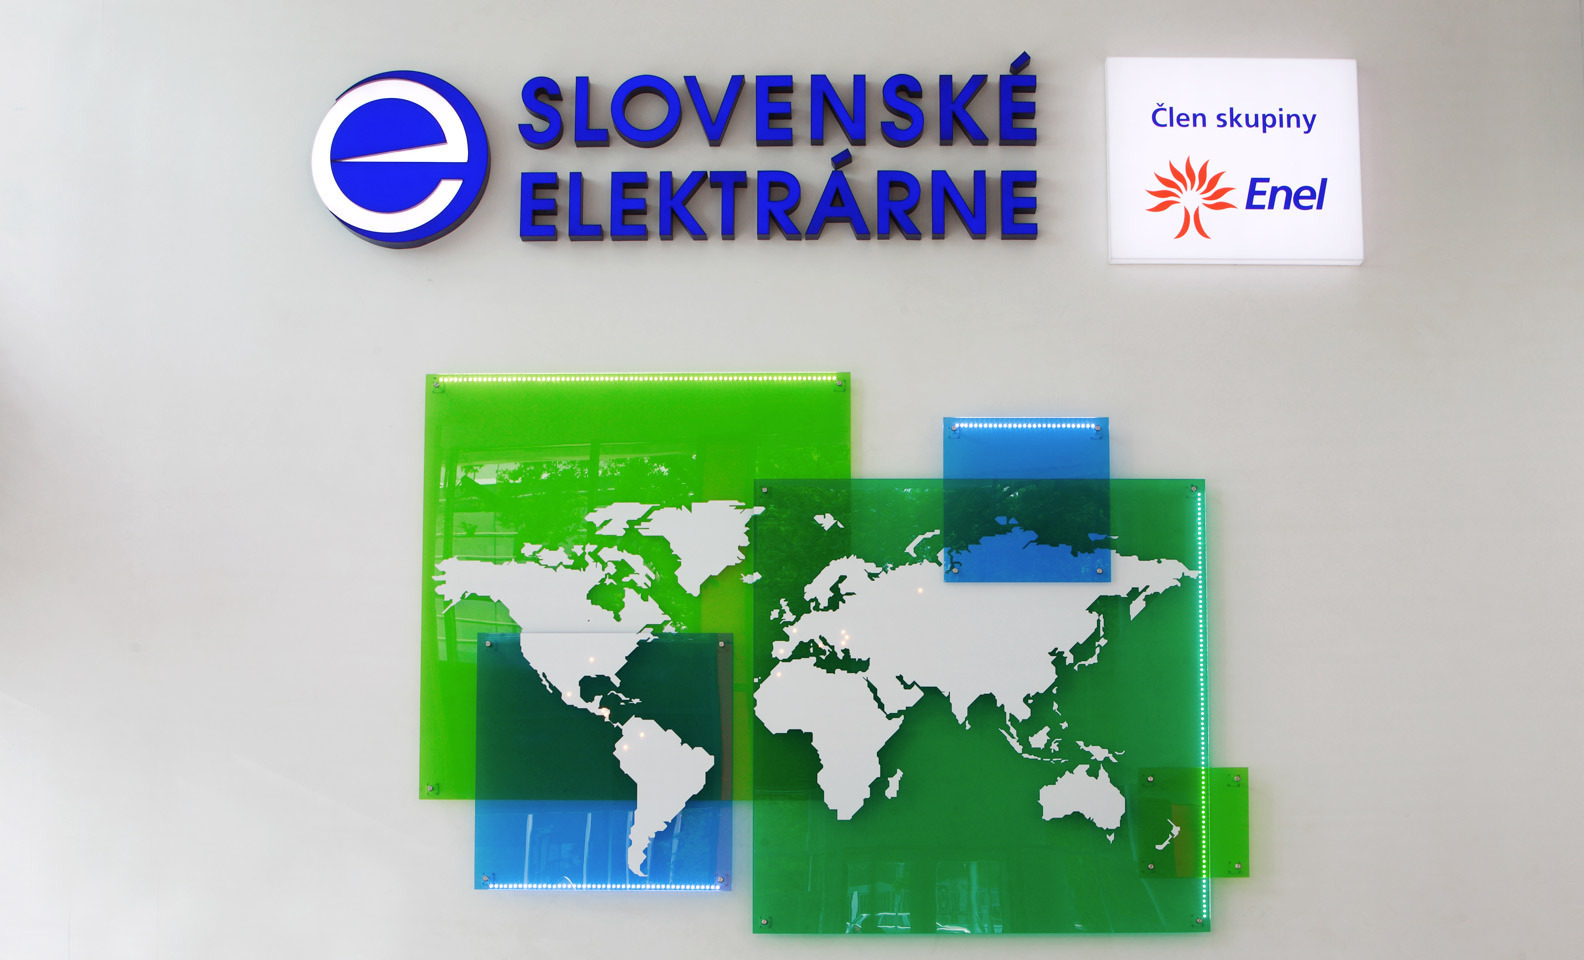 https://www.enel.com/content/dam/enel-com/immagini/horizontal-media_1584x960/logo-slovenske-elektrarne_1584x960.jpg